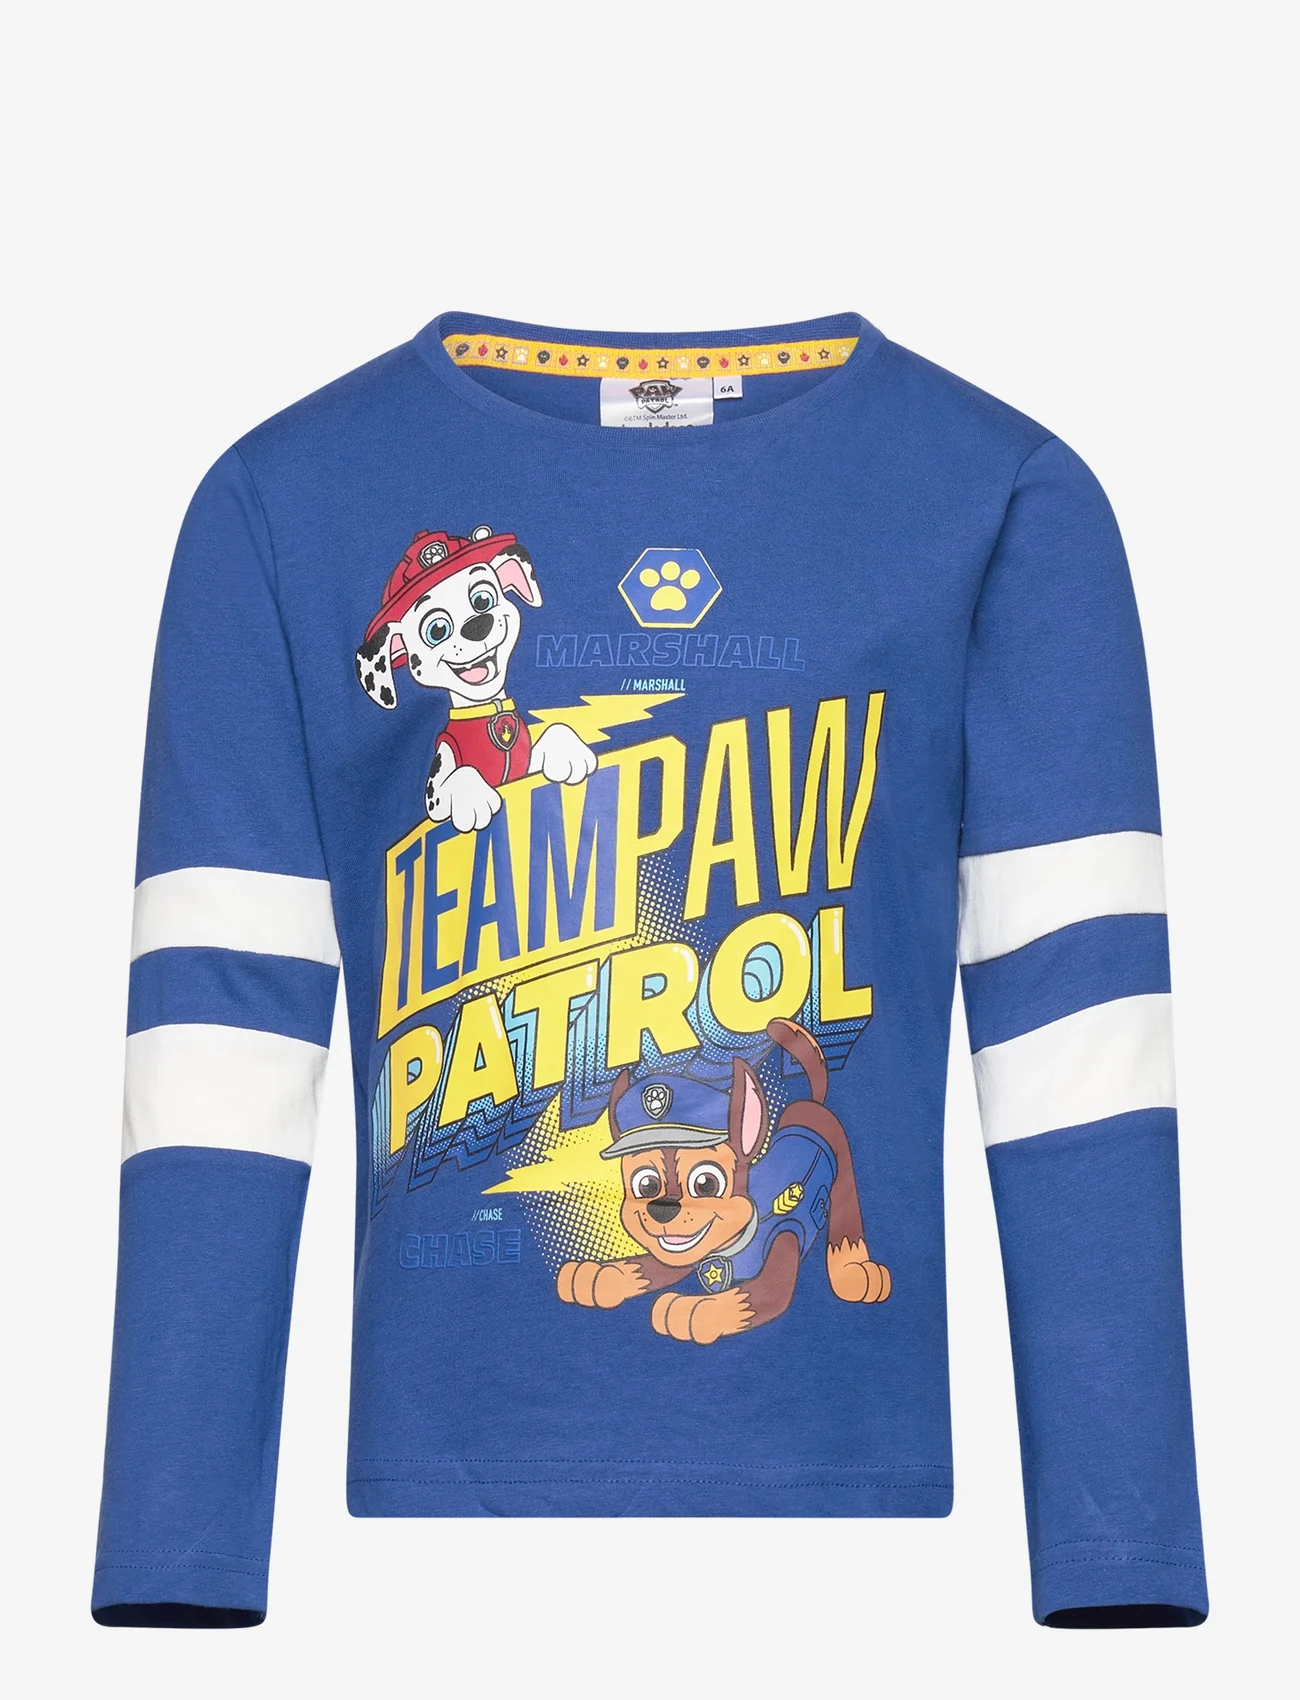 Paw Patrol - LONG-SLEEVED T-SHIRT - pitkähihaiset t-paidat - blue - 0